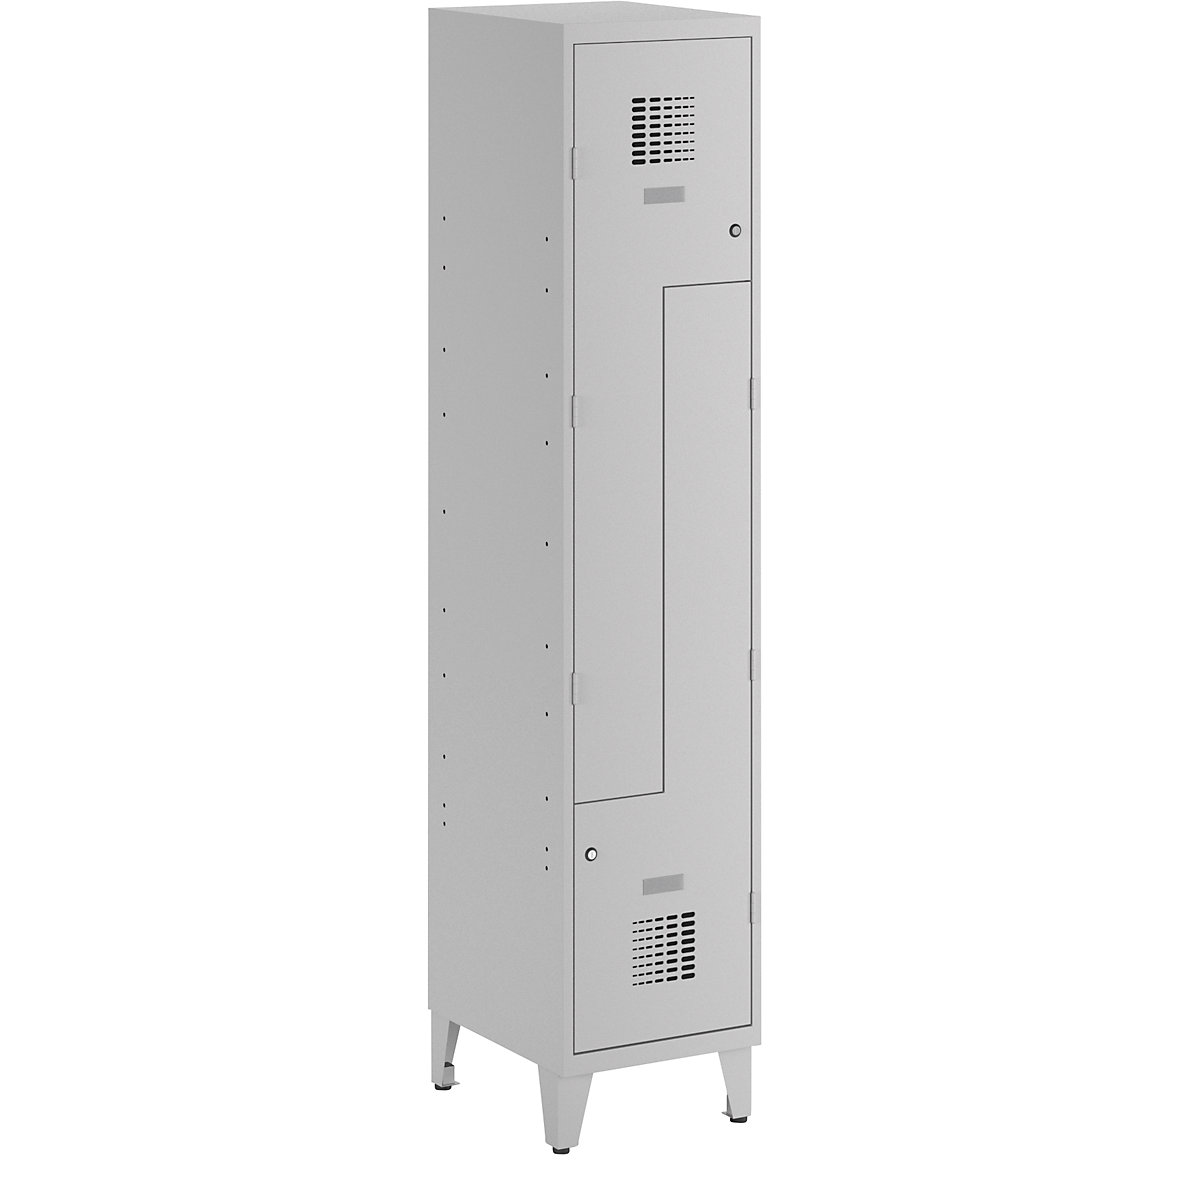 Z cloakroom locker, HxWxD 1940 x 400 x 500 mm, with feet, light grey doors-1